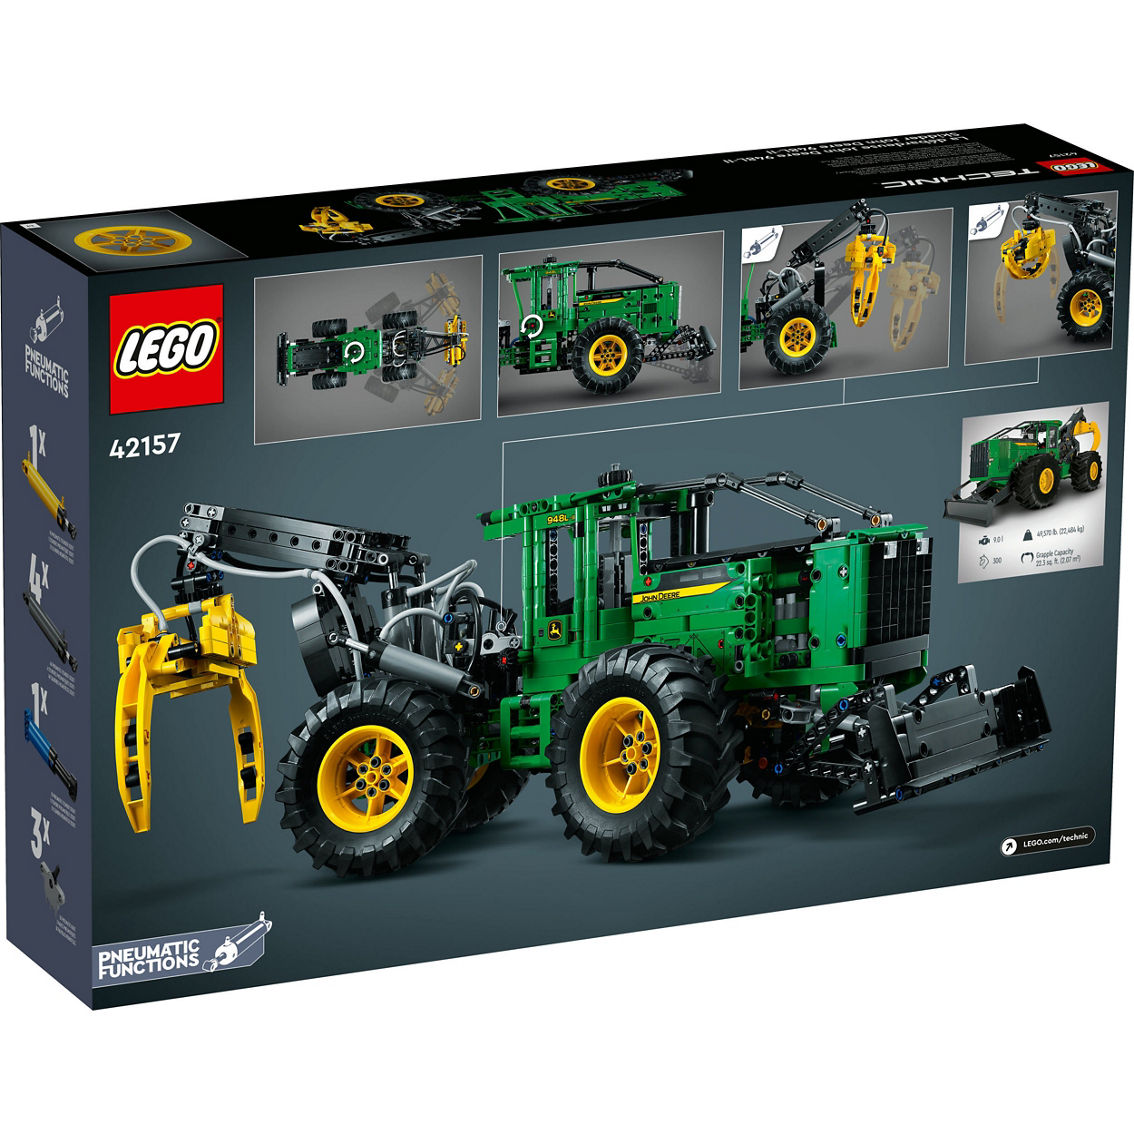 LEGO Technic John Deere 948L-II Skidder Tractor Toy 42157 - Image 2 of 10